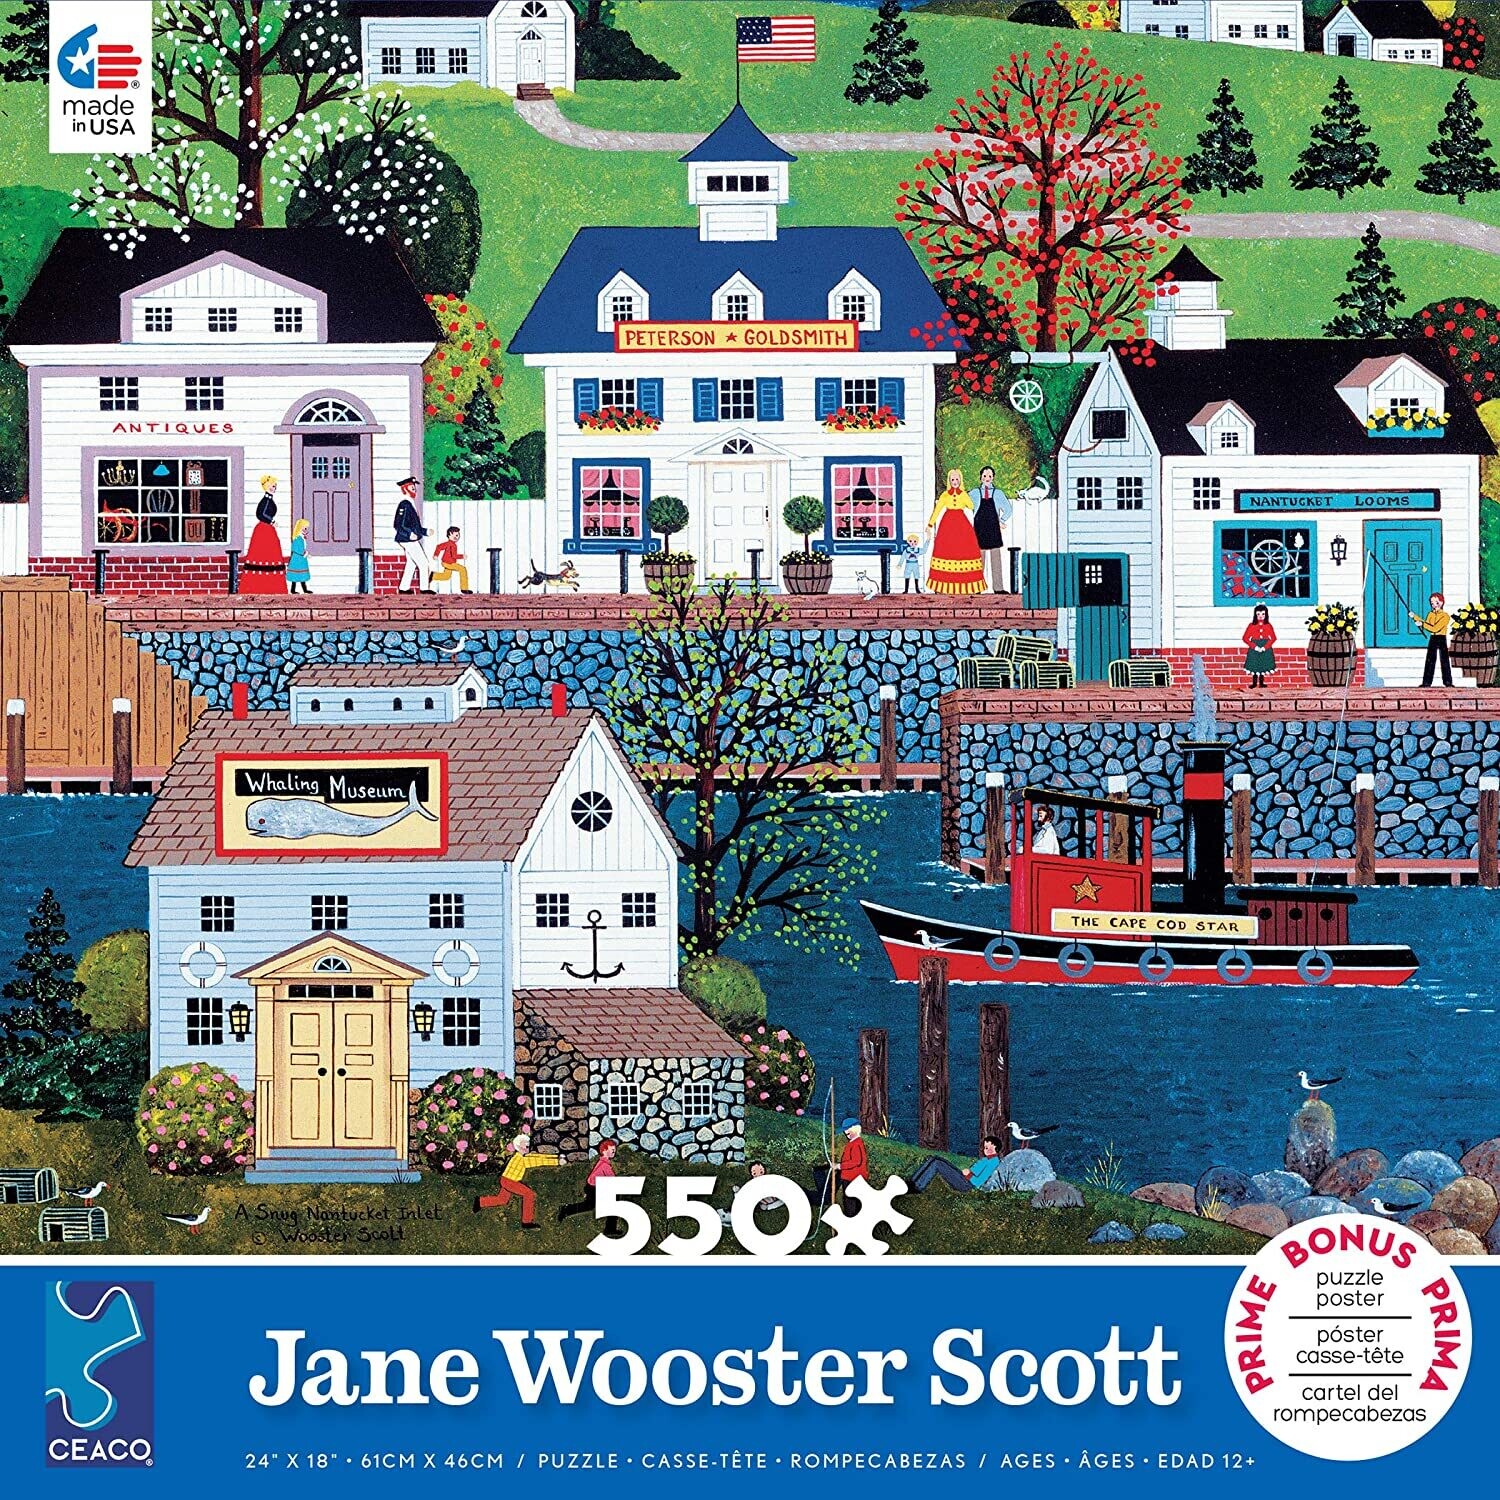 Jane Wooster Scott Cape Cod 550 Pc